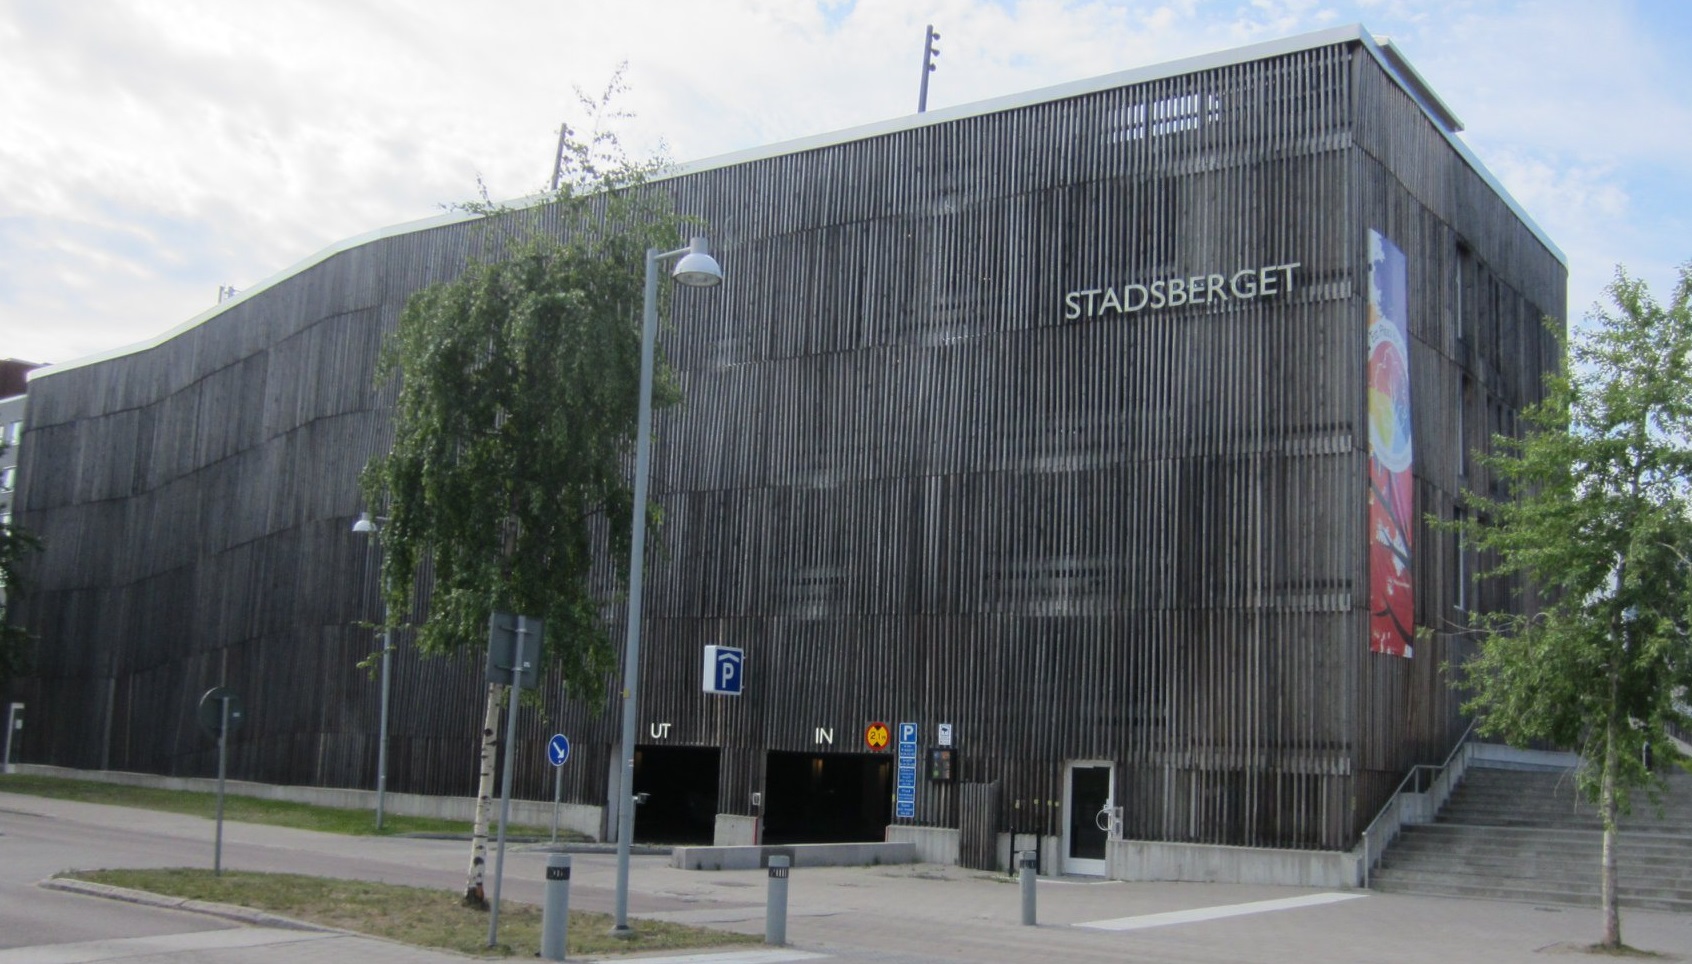 Parkeringshuset Stadsberget är Piteås fulaste byggnad.